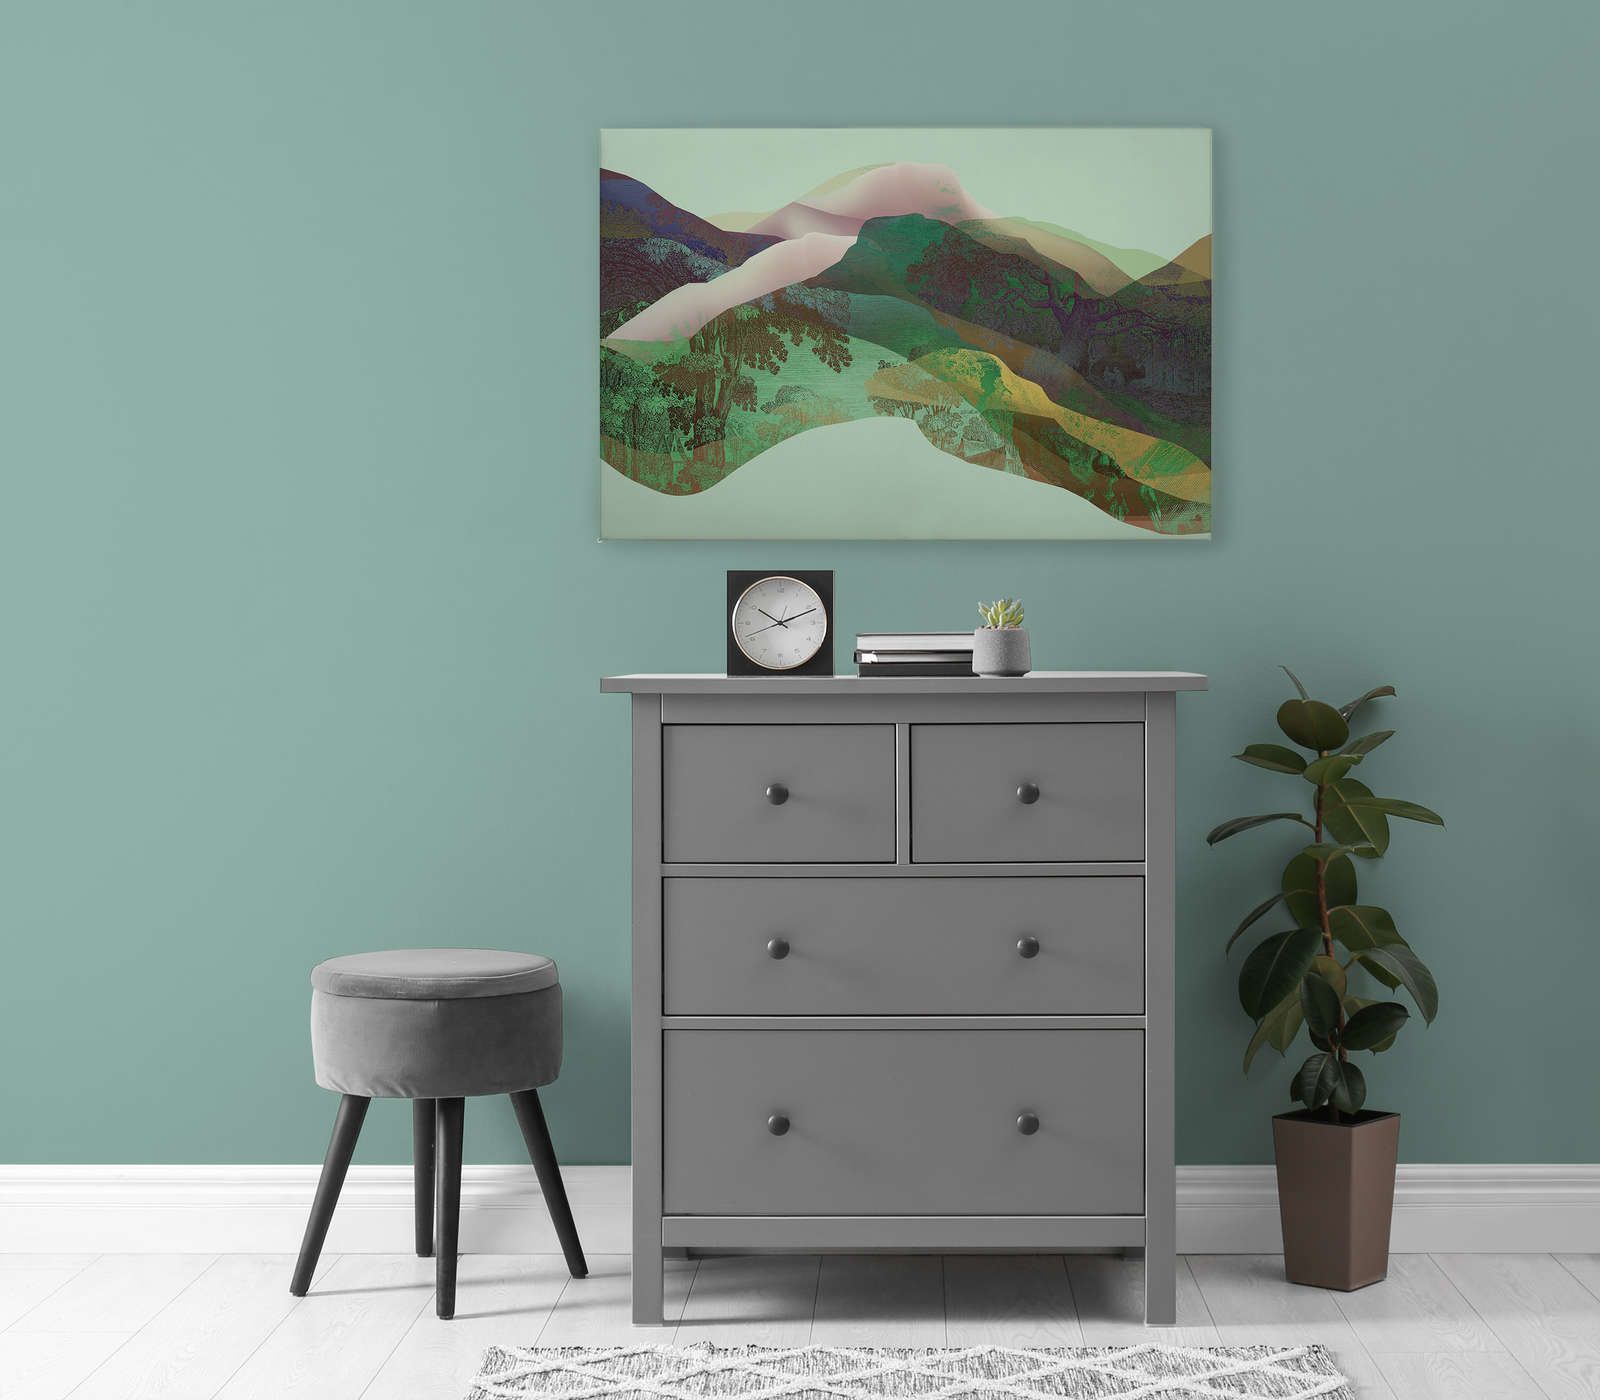             Magic Mountain 3 - Canvas painting green mountains modern design - 0,90 m x 0,60 m
        